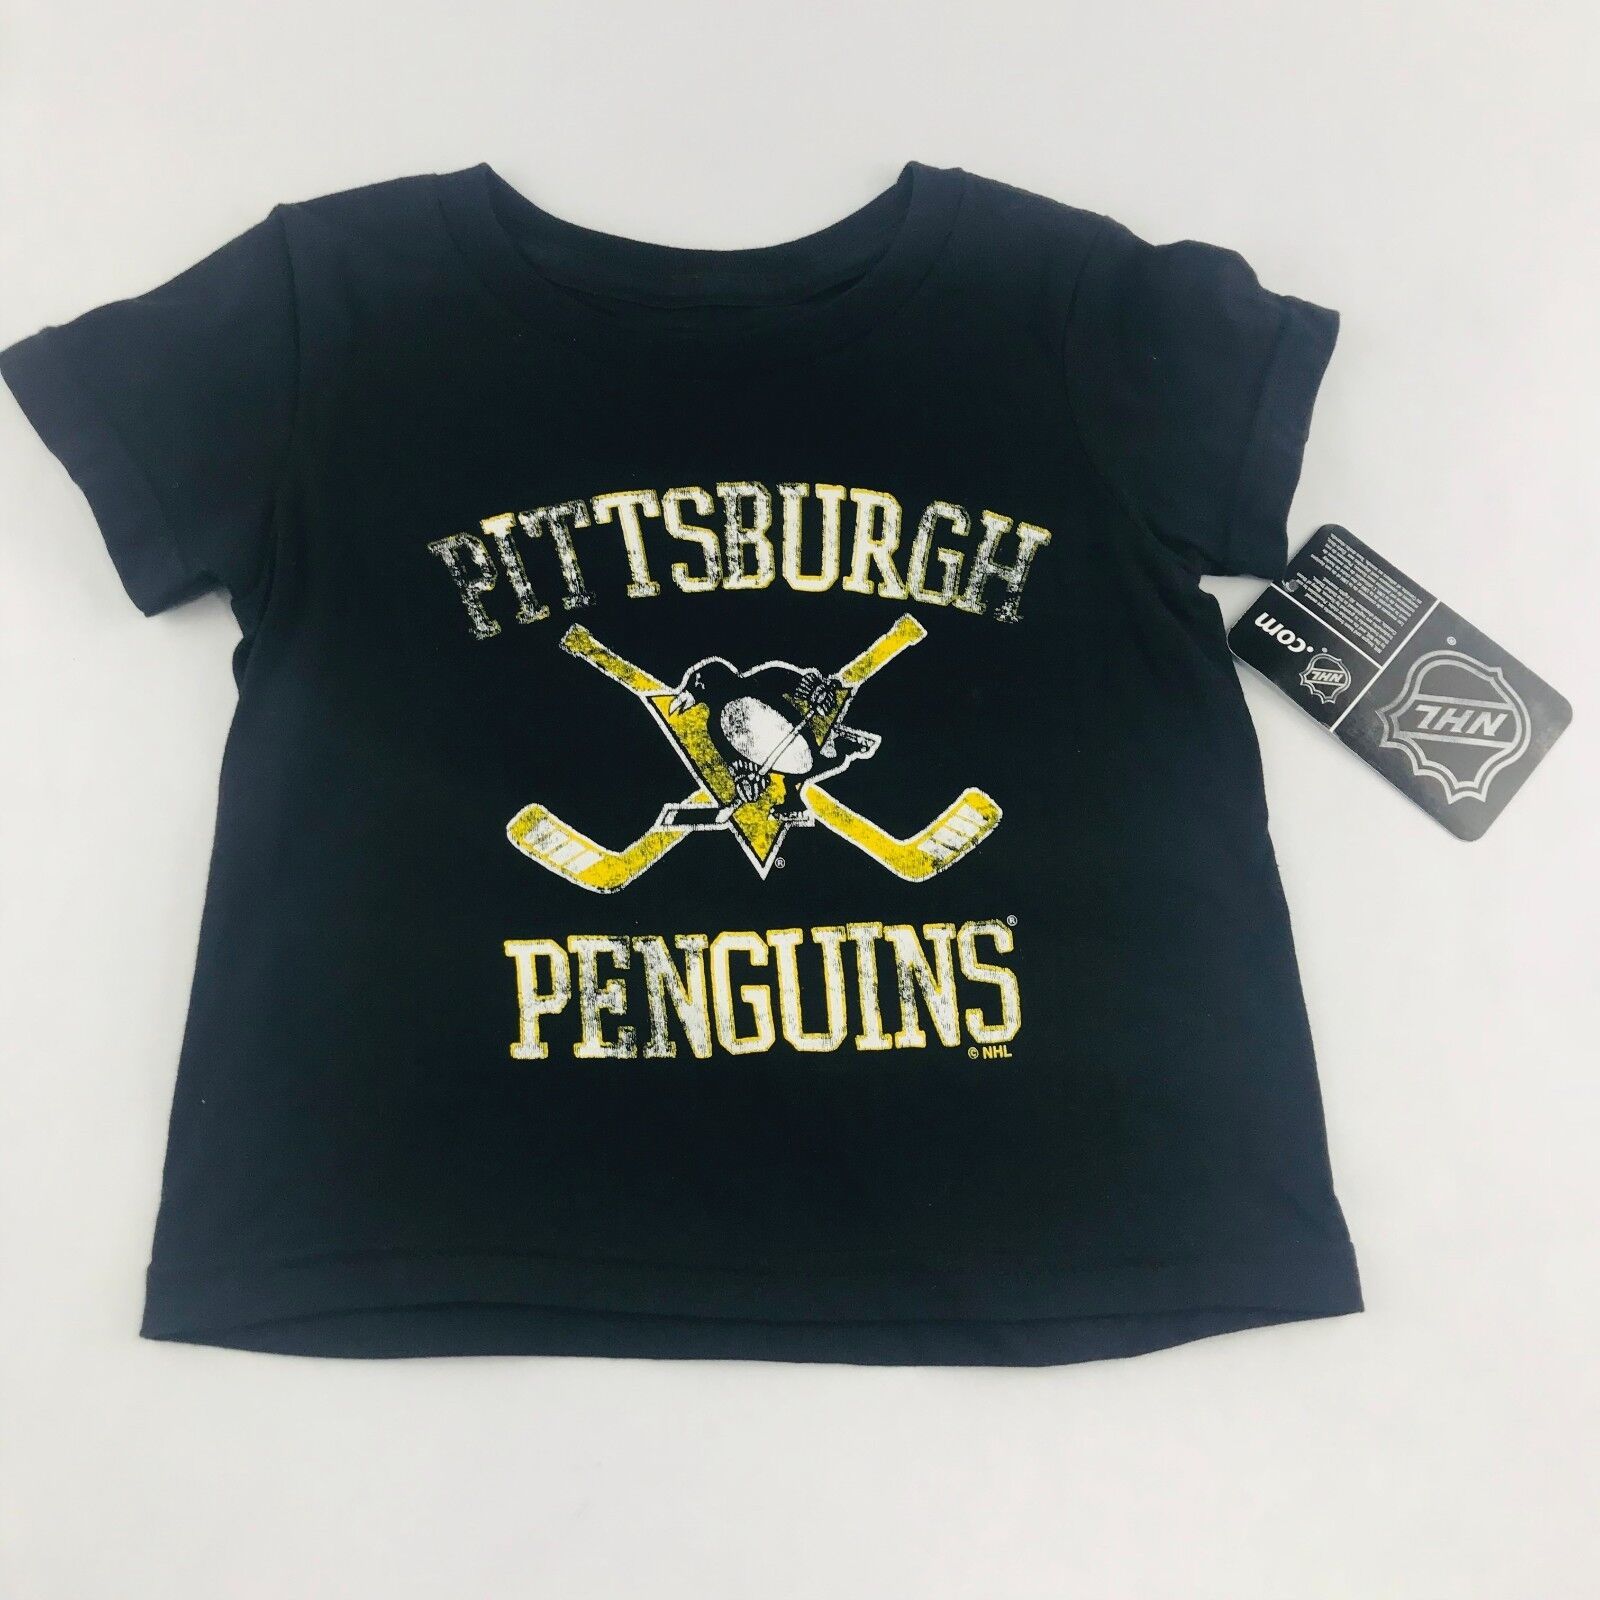 NWT Seattle Kraken Shirt Adult Small Gray NHL Hockey T-Shirt Fan Apparel  Mens